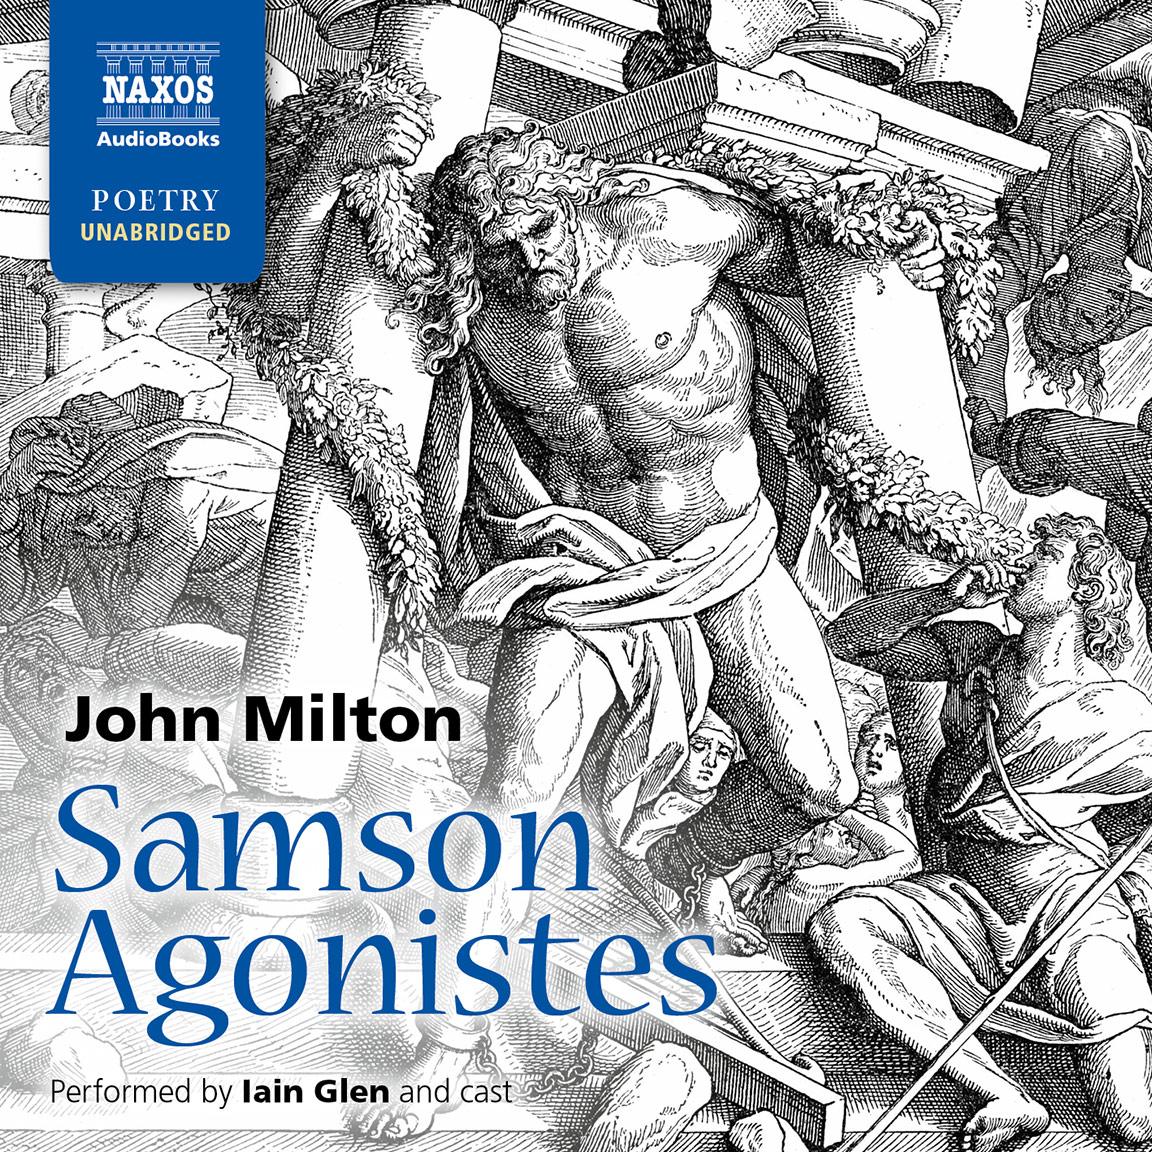 Samson Agonistes (unabridged)